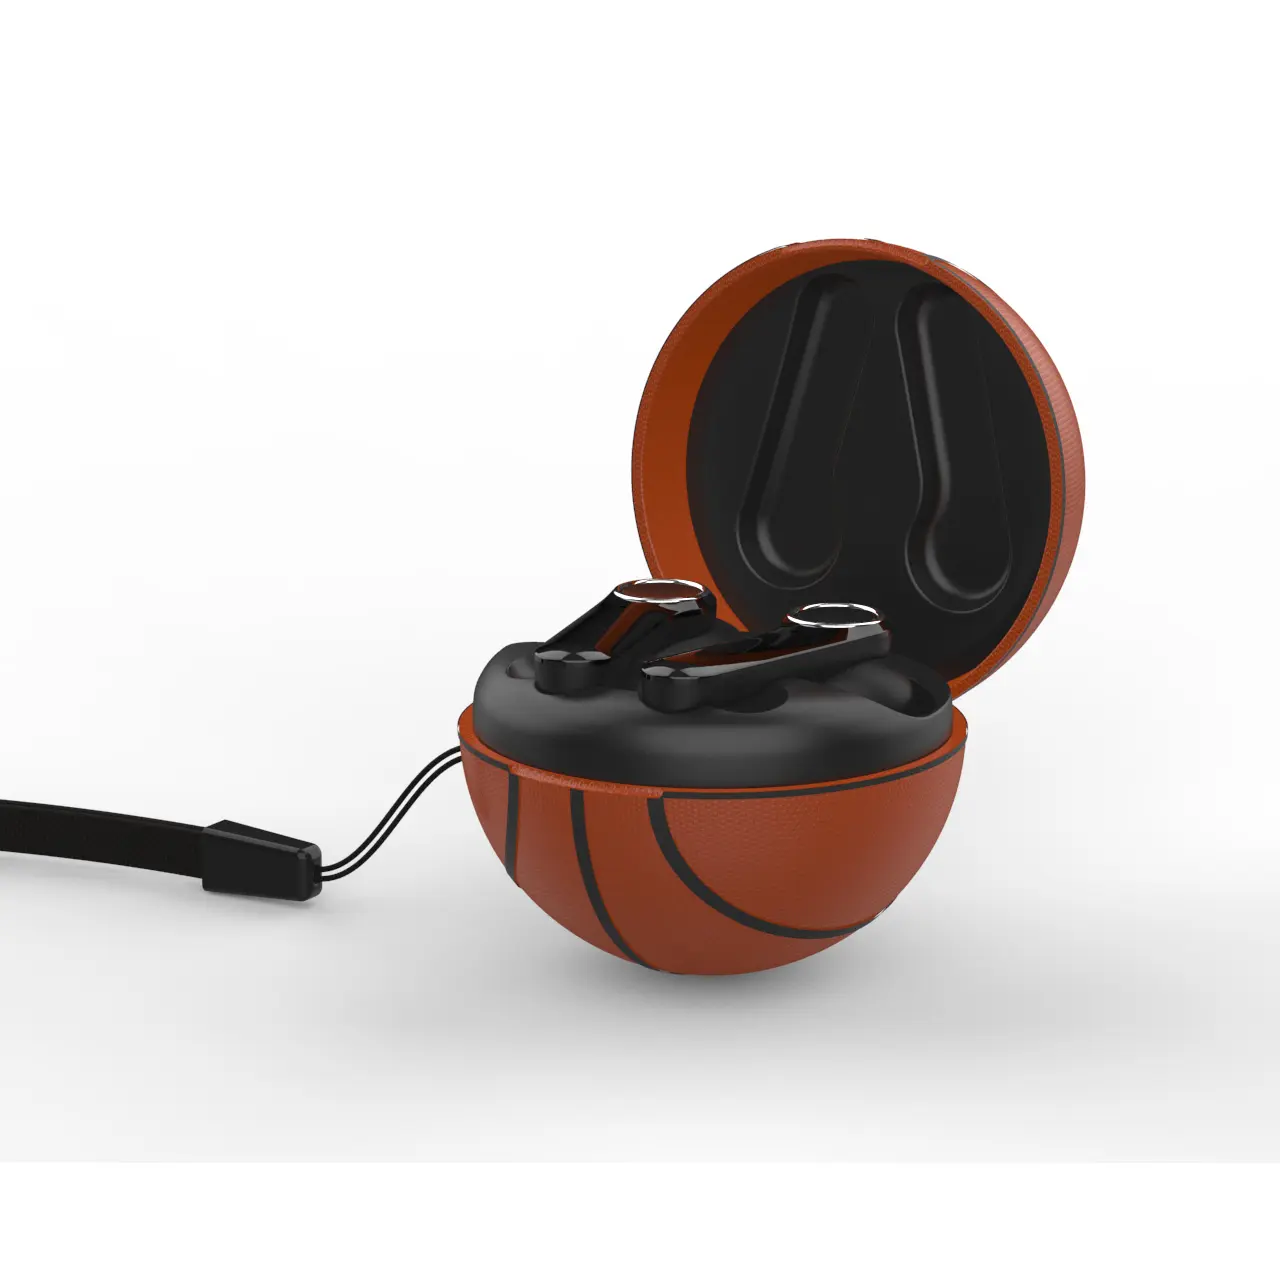 Small Basket Promotional Gift Ball Earbuds OEM Design Earphones BT Headphones Mini Ball Earplugs